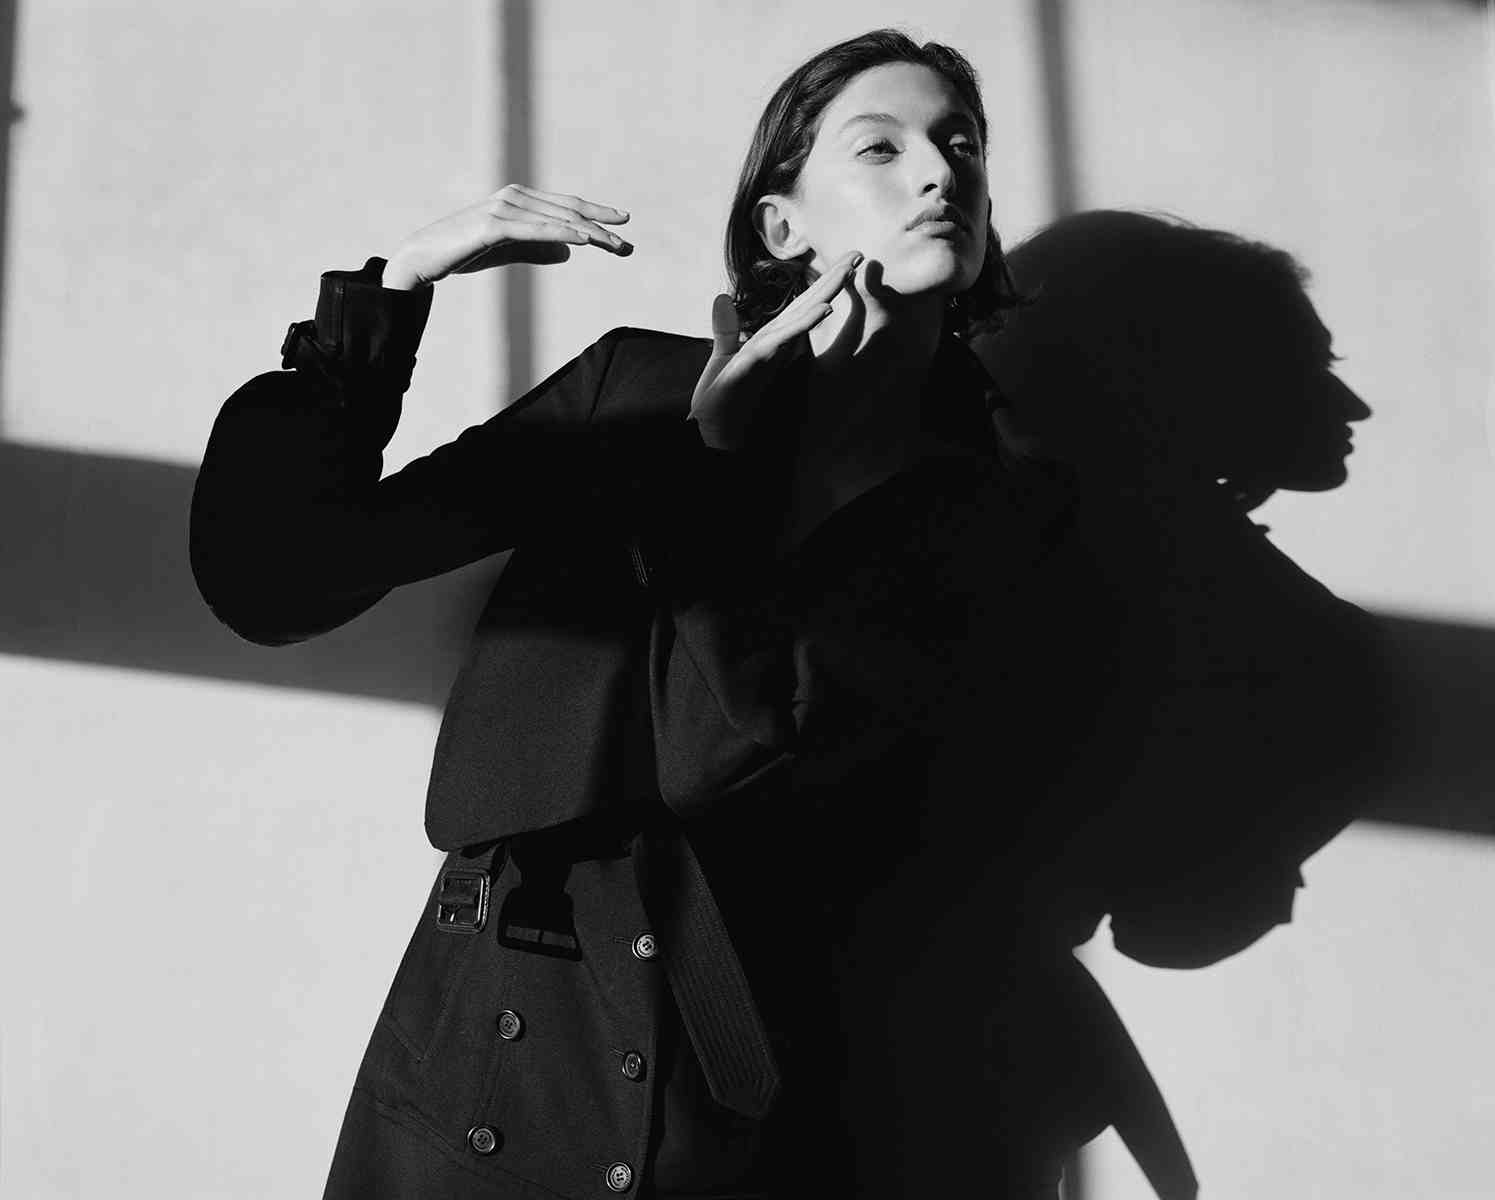 T-MAGAZINE CHINA - January 2017
Photographer: Ben Weller
Model: Amber Witcomb
Stylist: Woo Wu
Location: London, UK